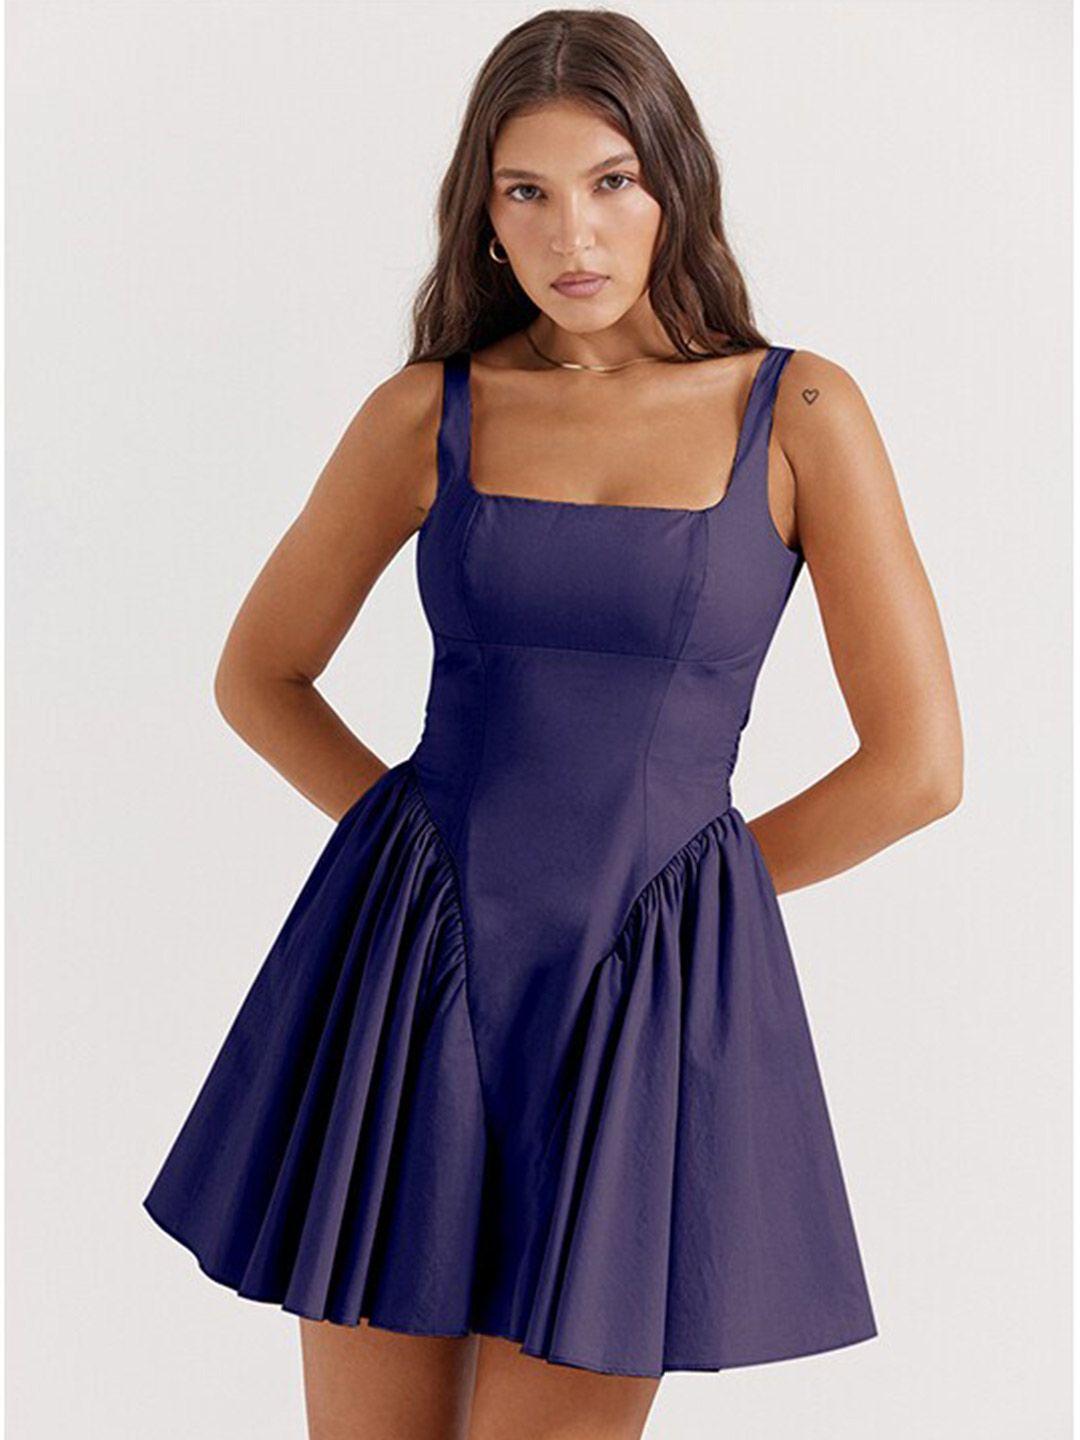 stylecast navy blue fit & flare mini dress